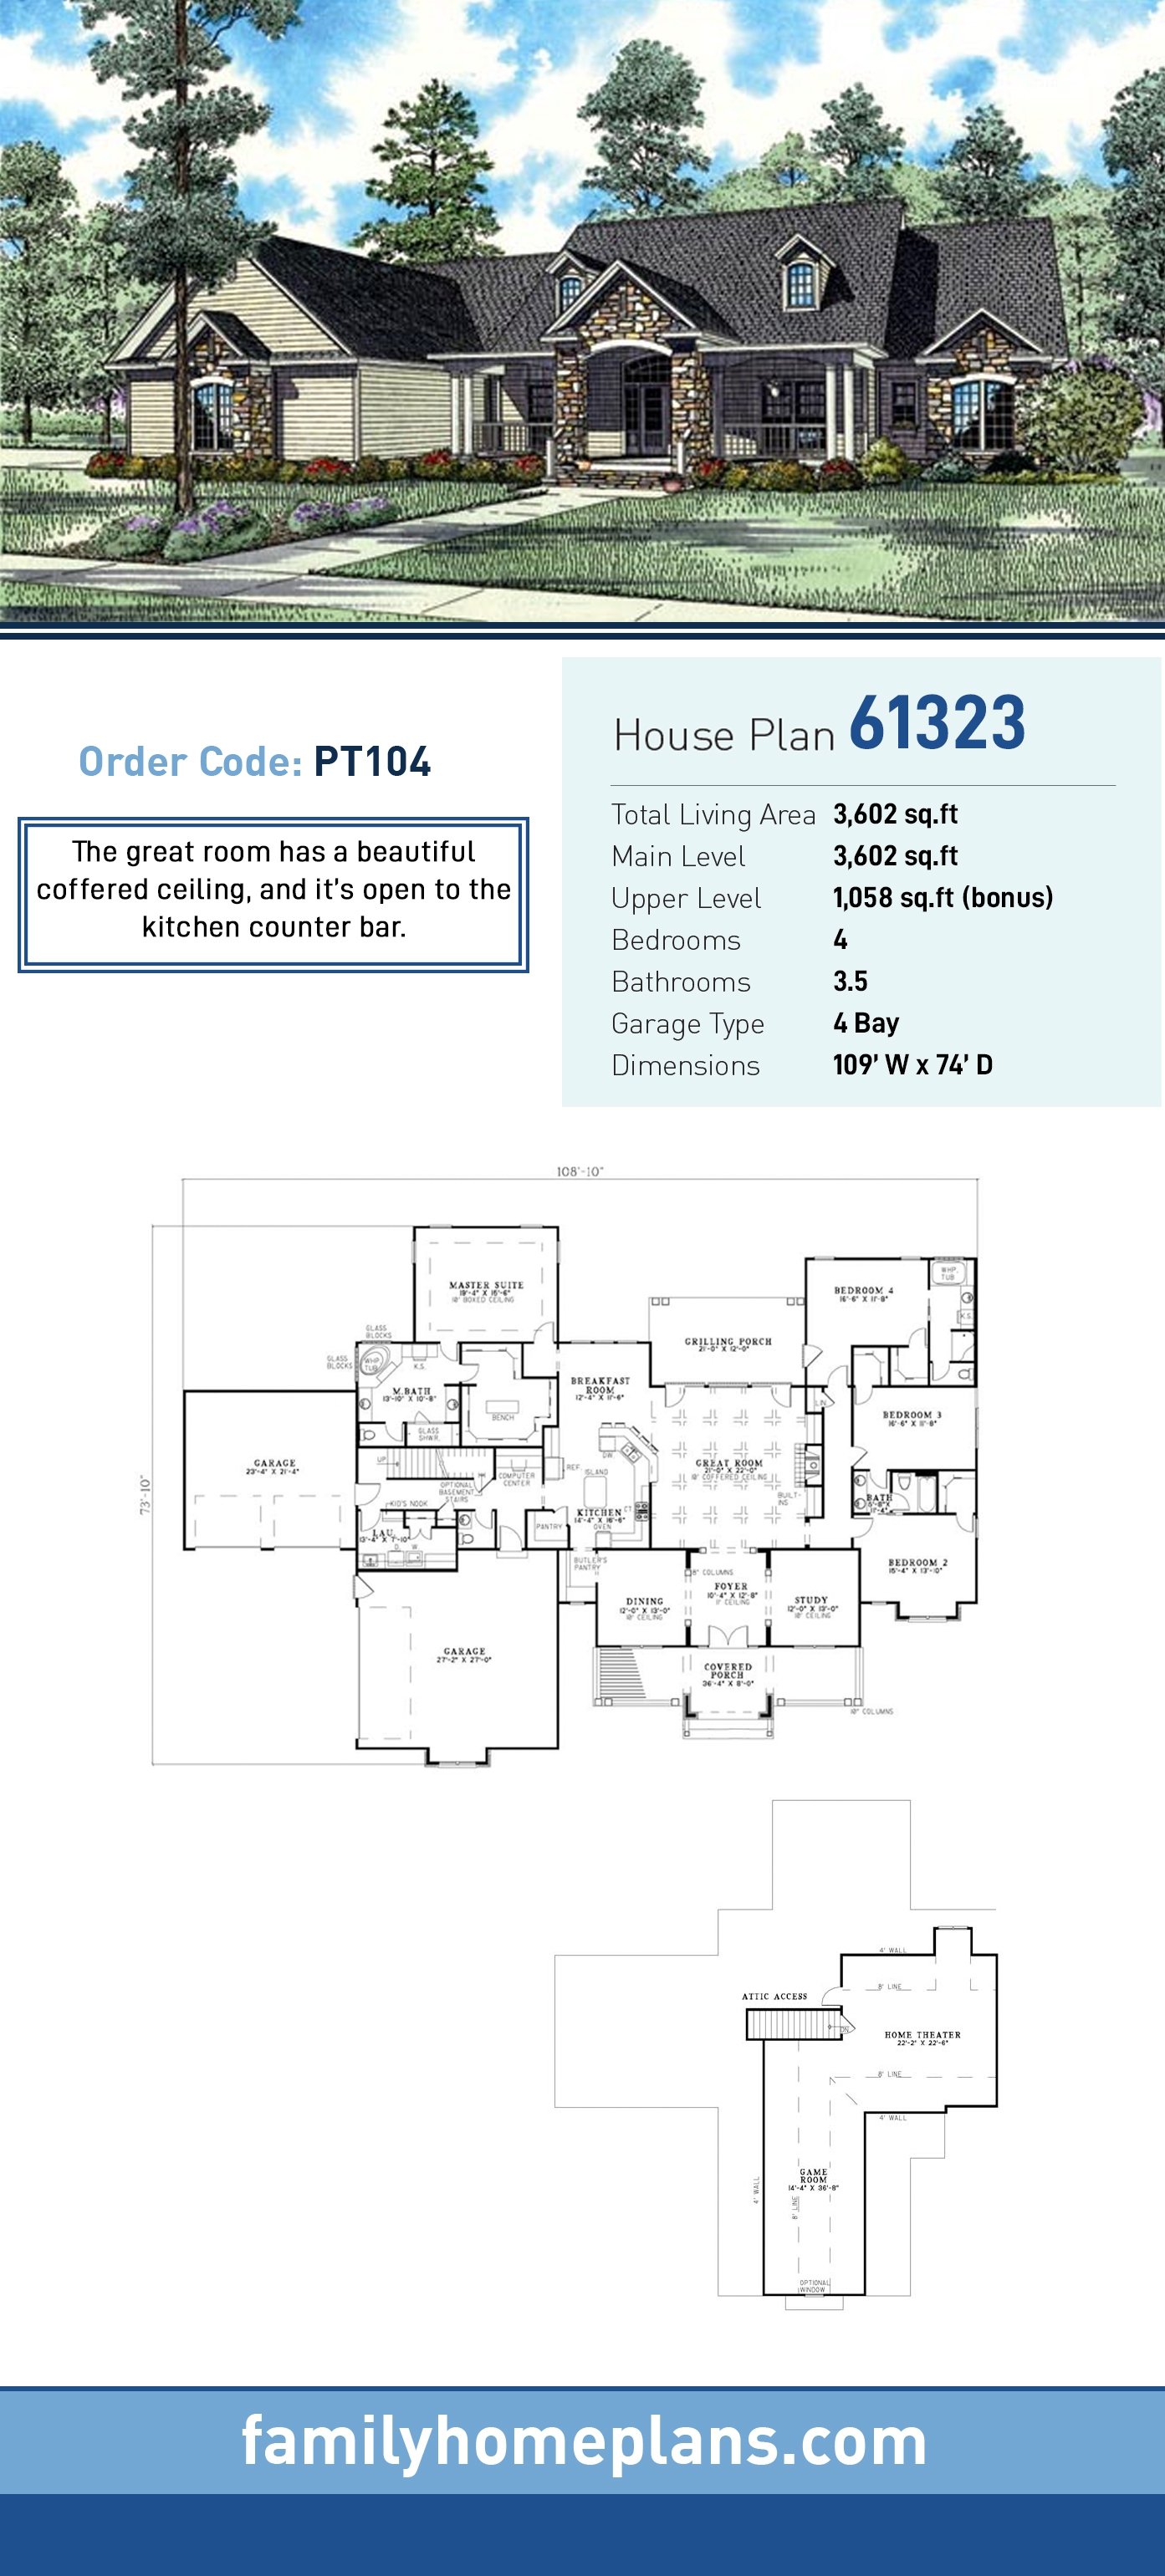 House Plan 61323